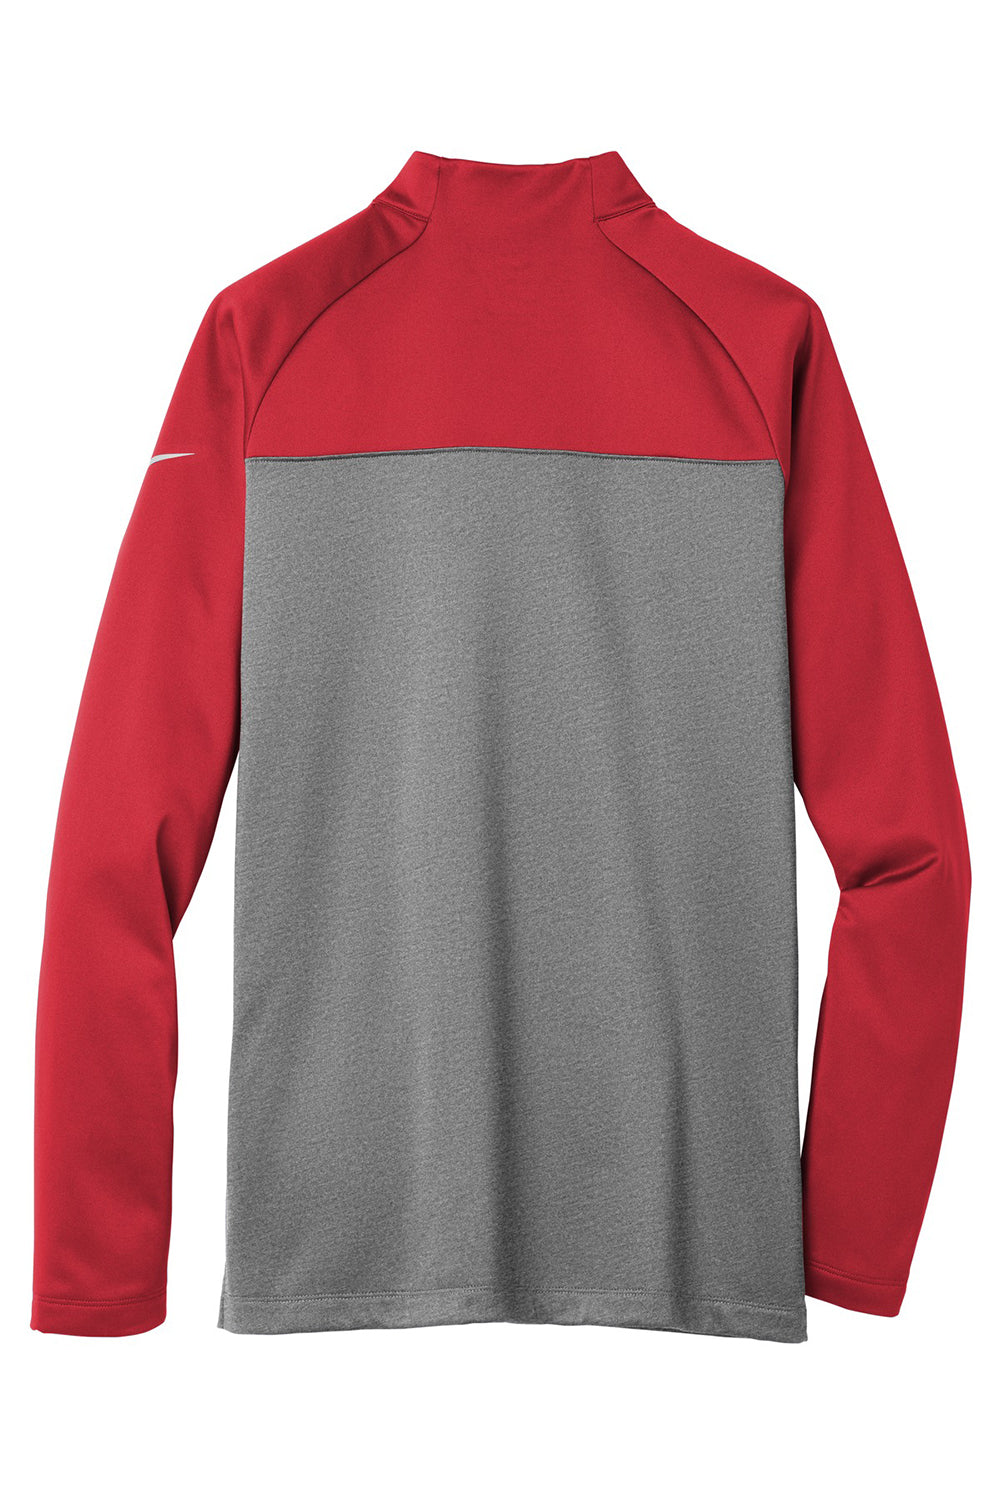 Nike NKAH6254 Mens Therma-Fit Moisture Wicking Fleece 1/4 Zip Sweatshirt Gym Red/Heather Grey Flat Back